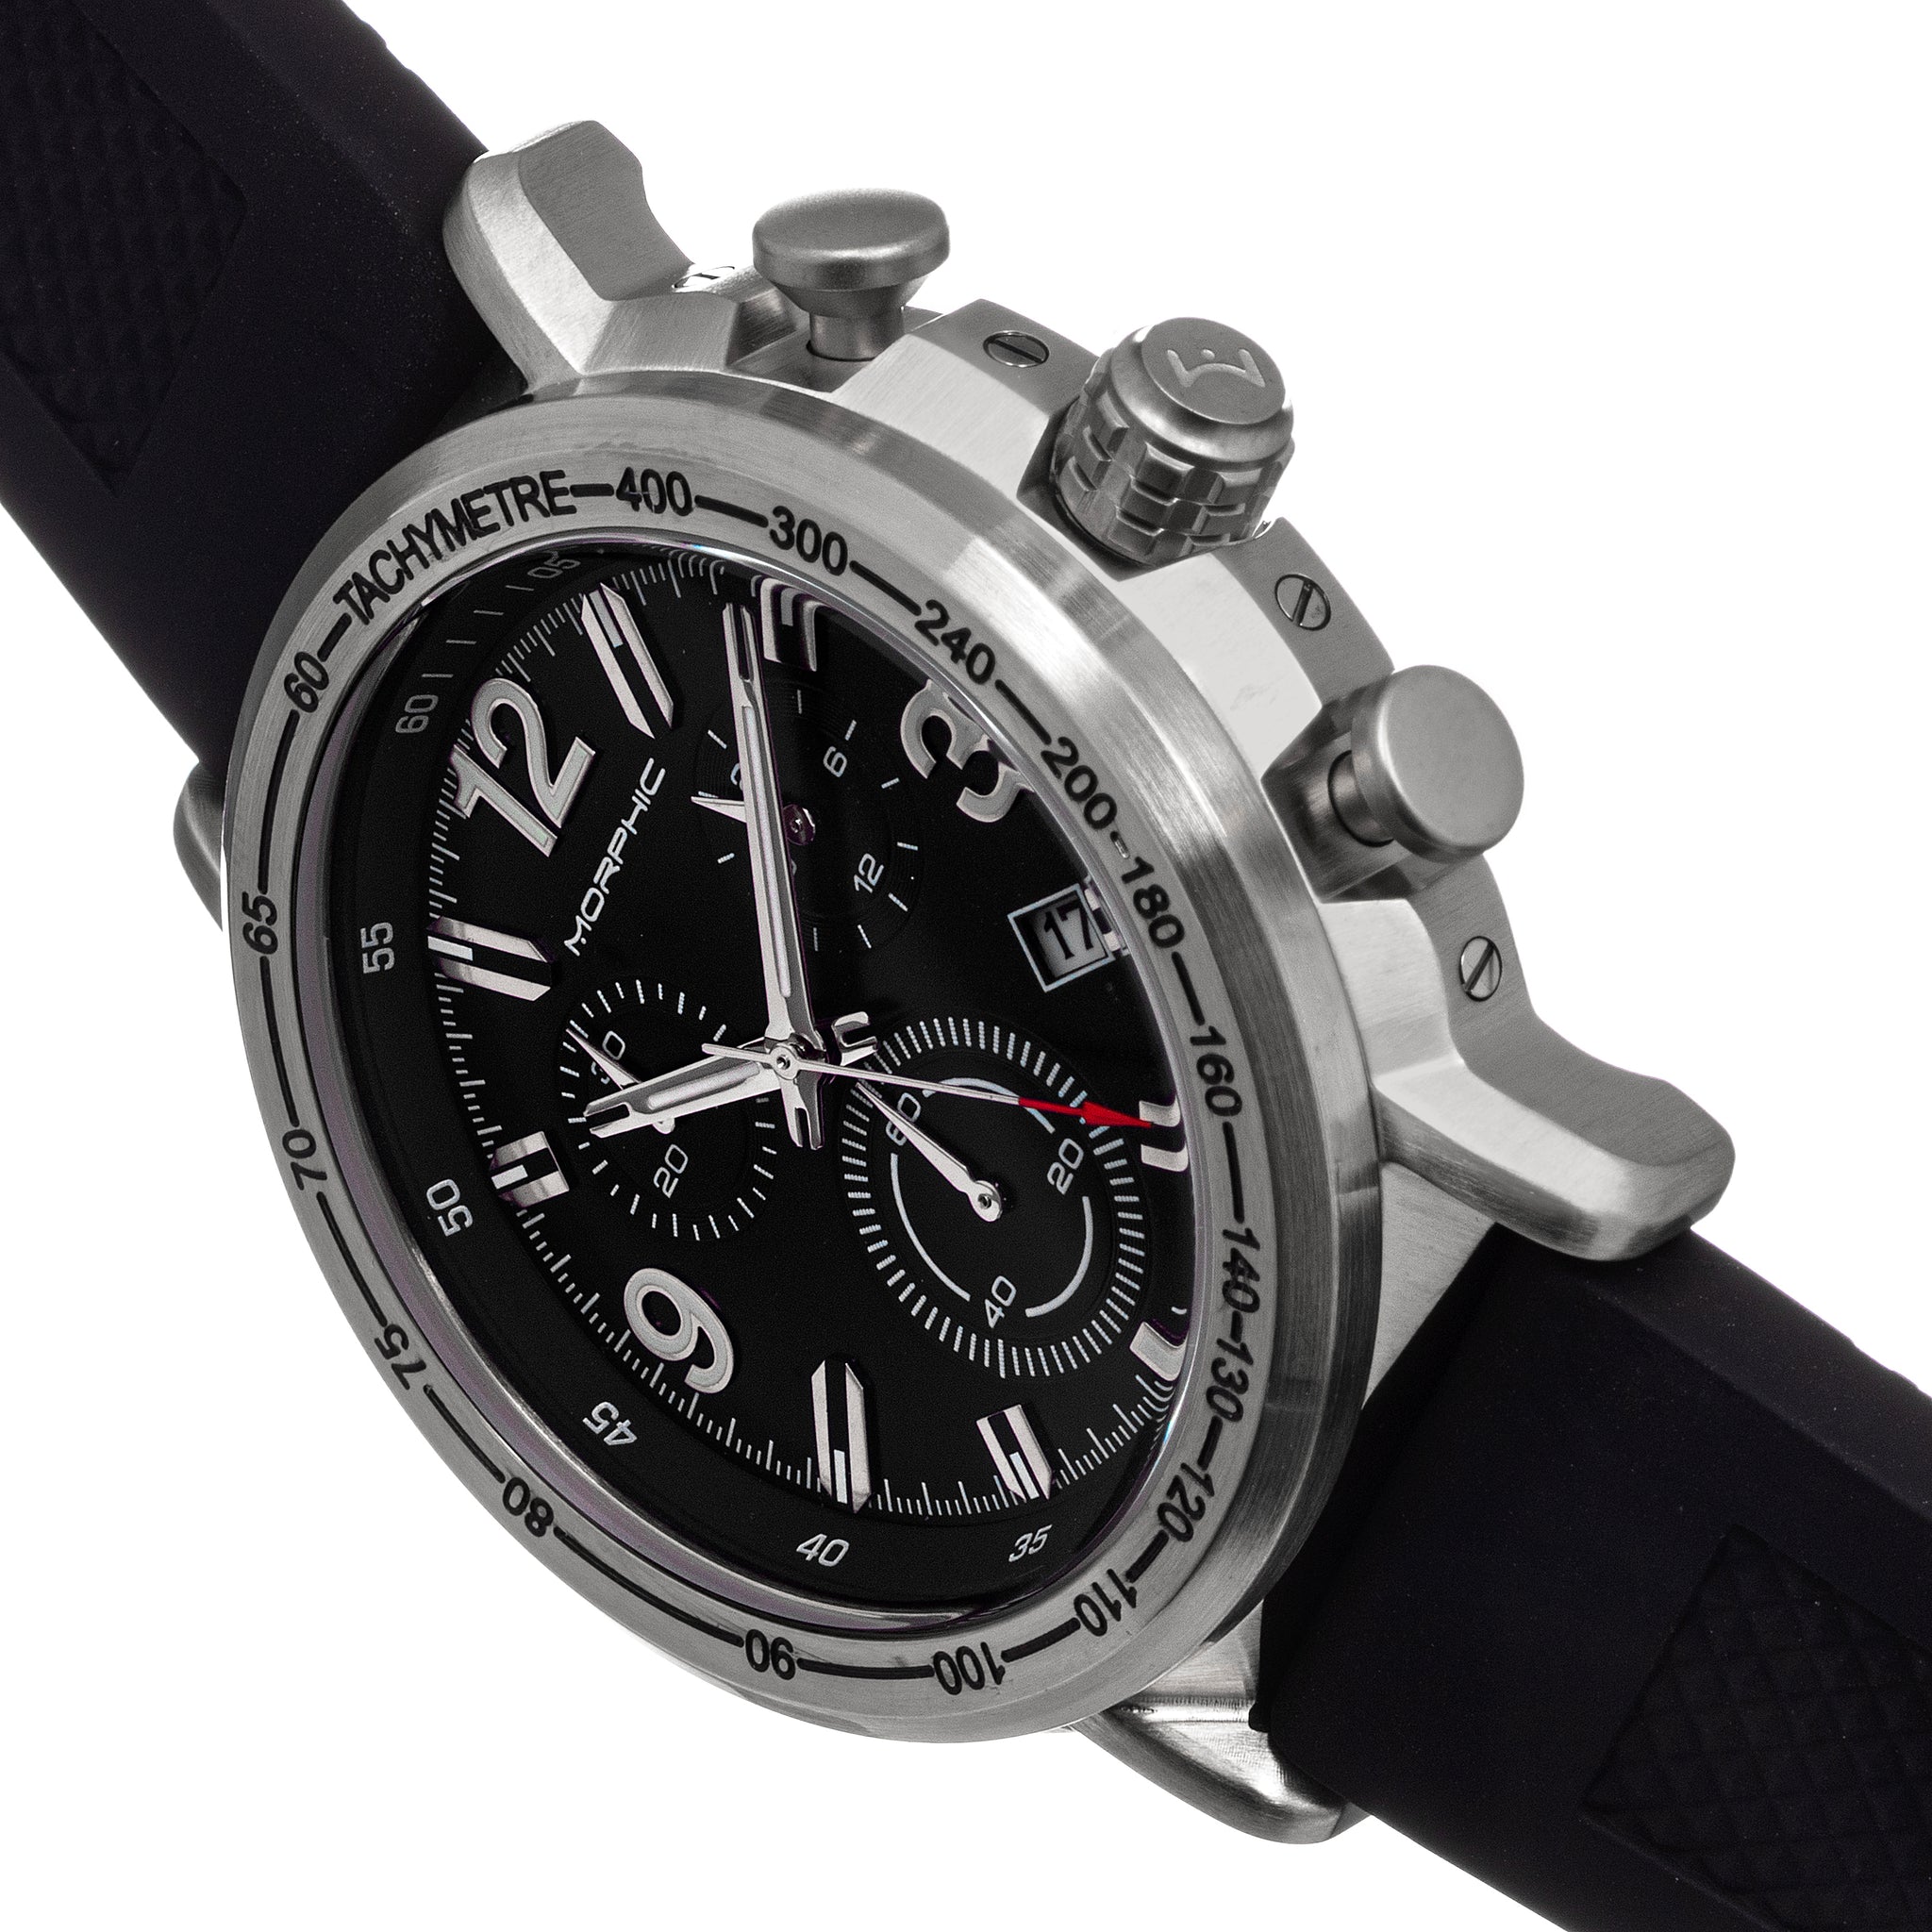 Morphic M93 Series Chronograph Strap Watch w/Date - Silver/Black - MPH9301